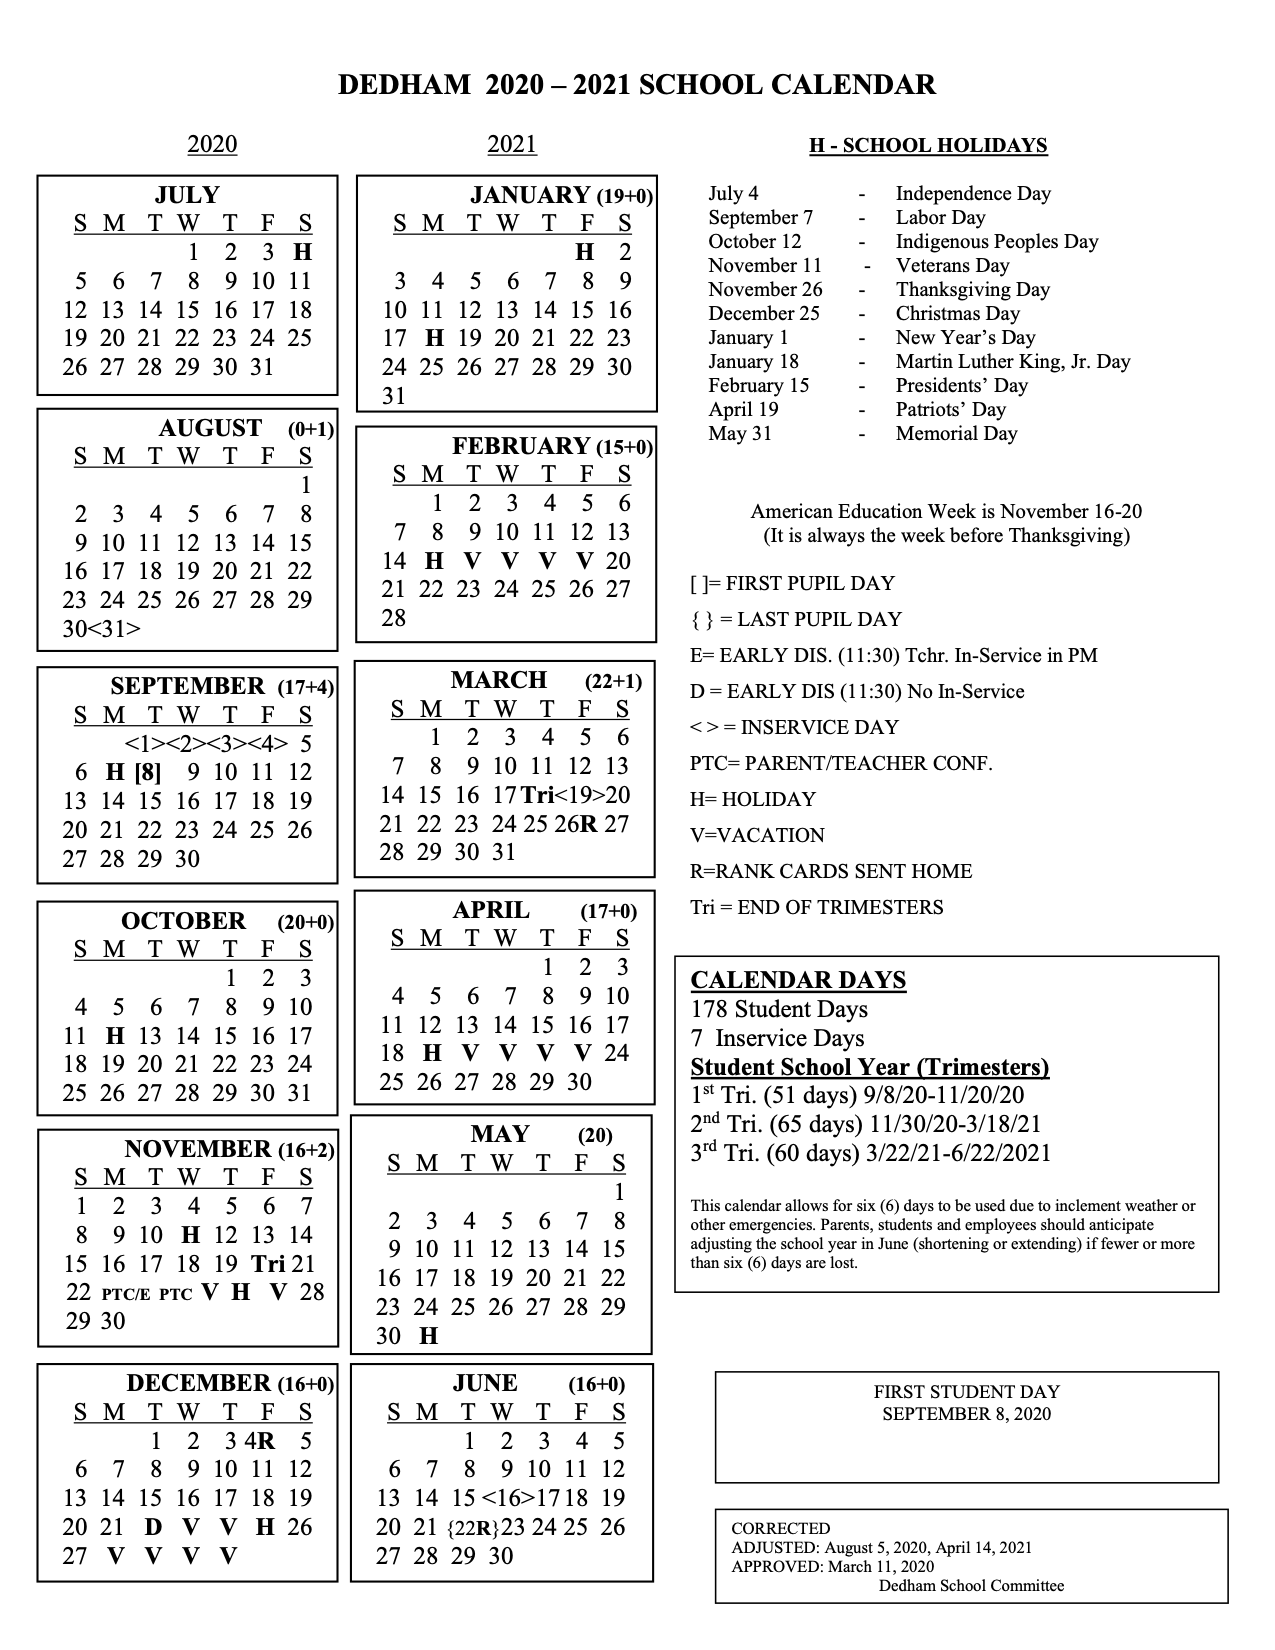 school-year-calendar-dedham-school